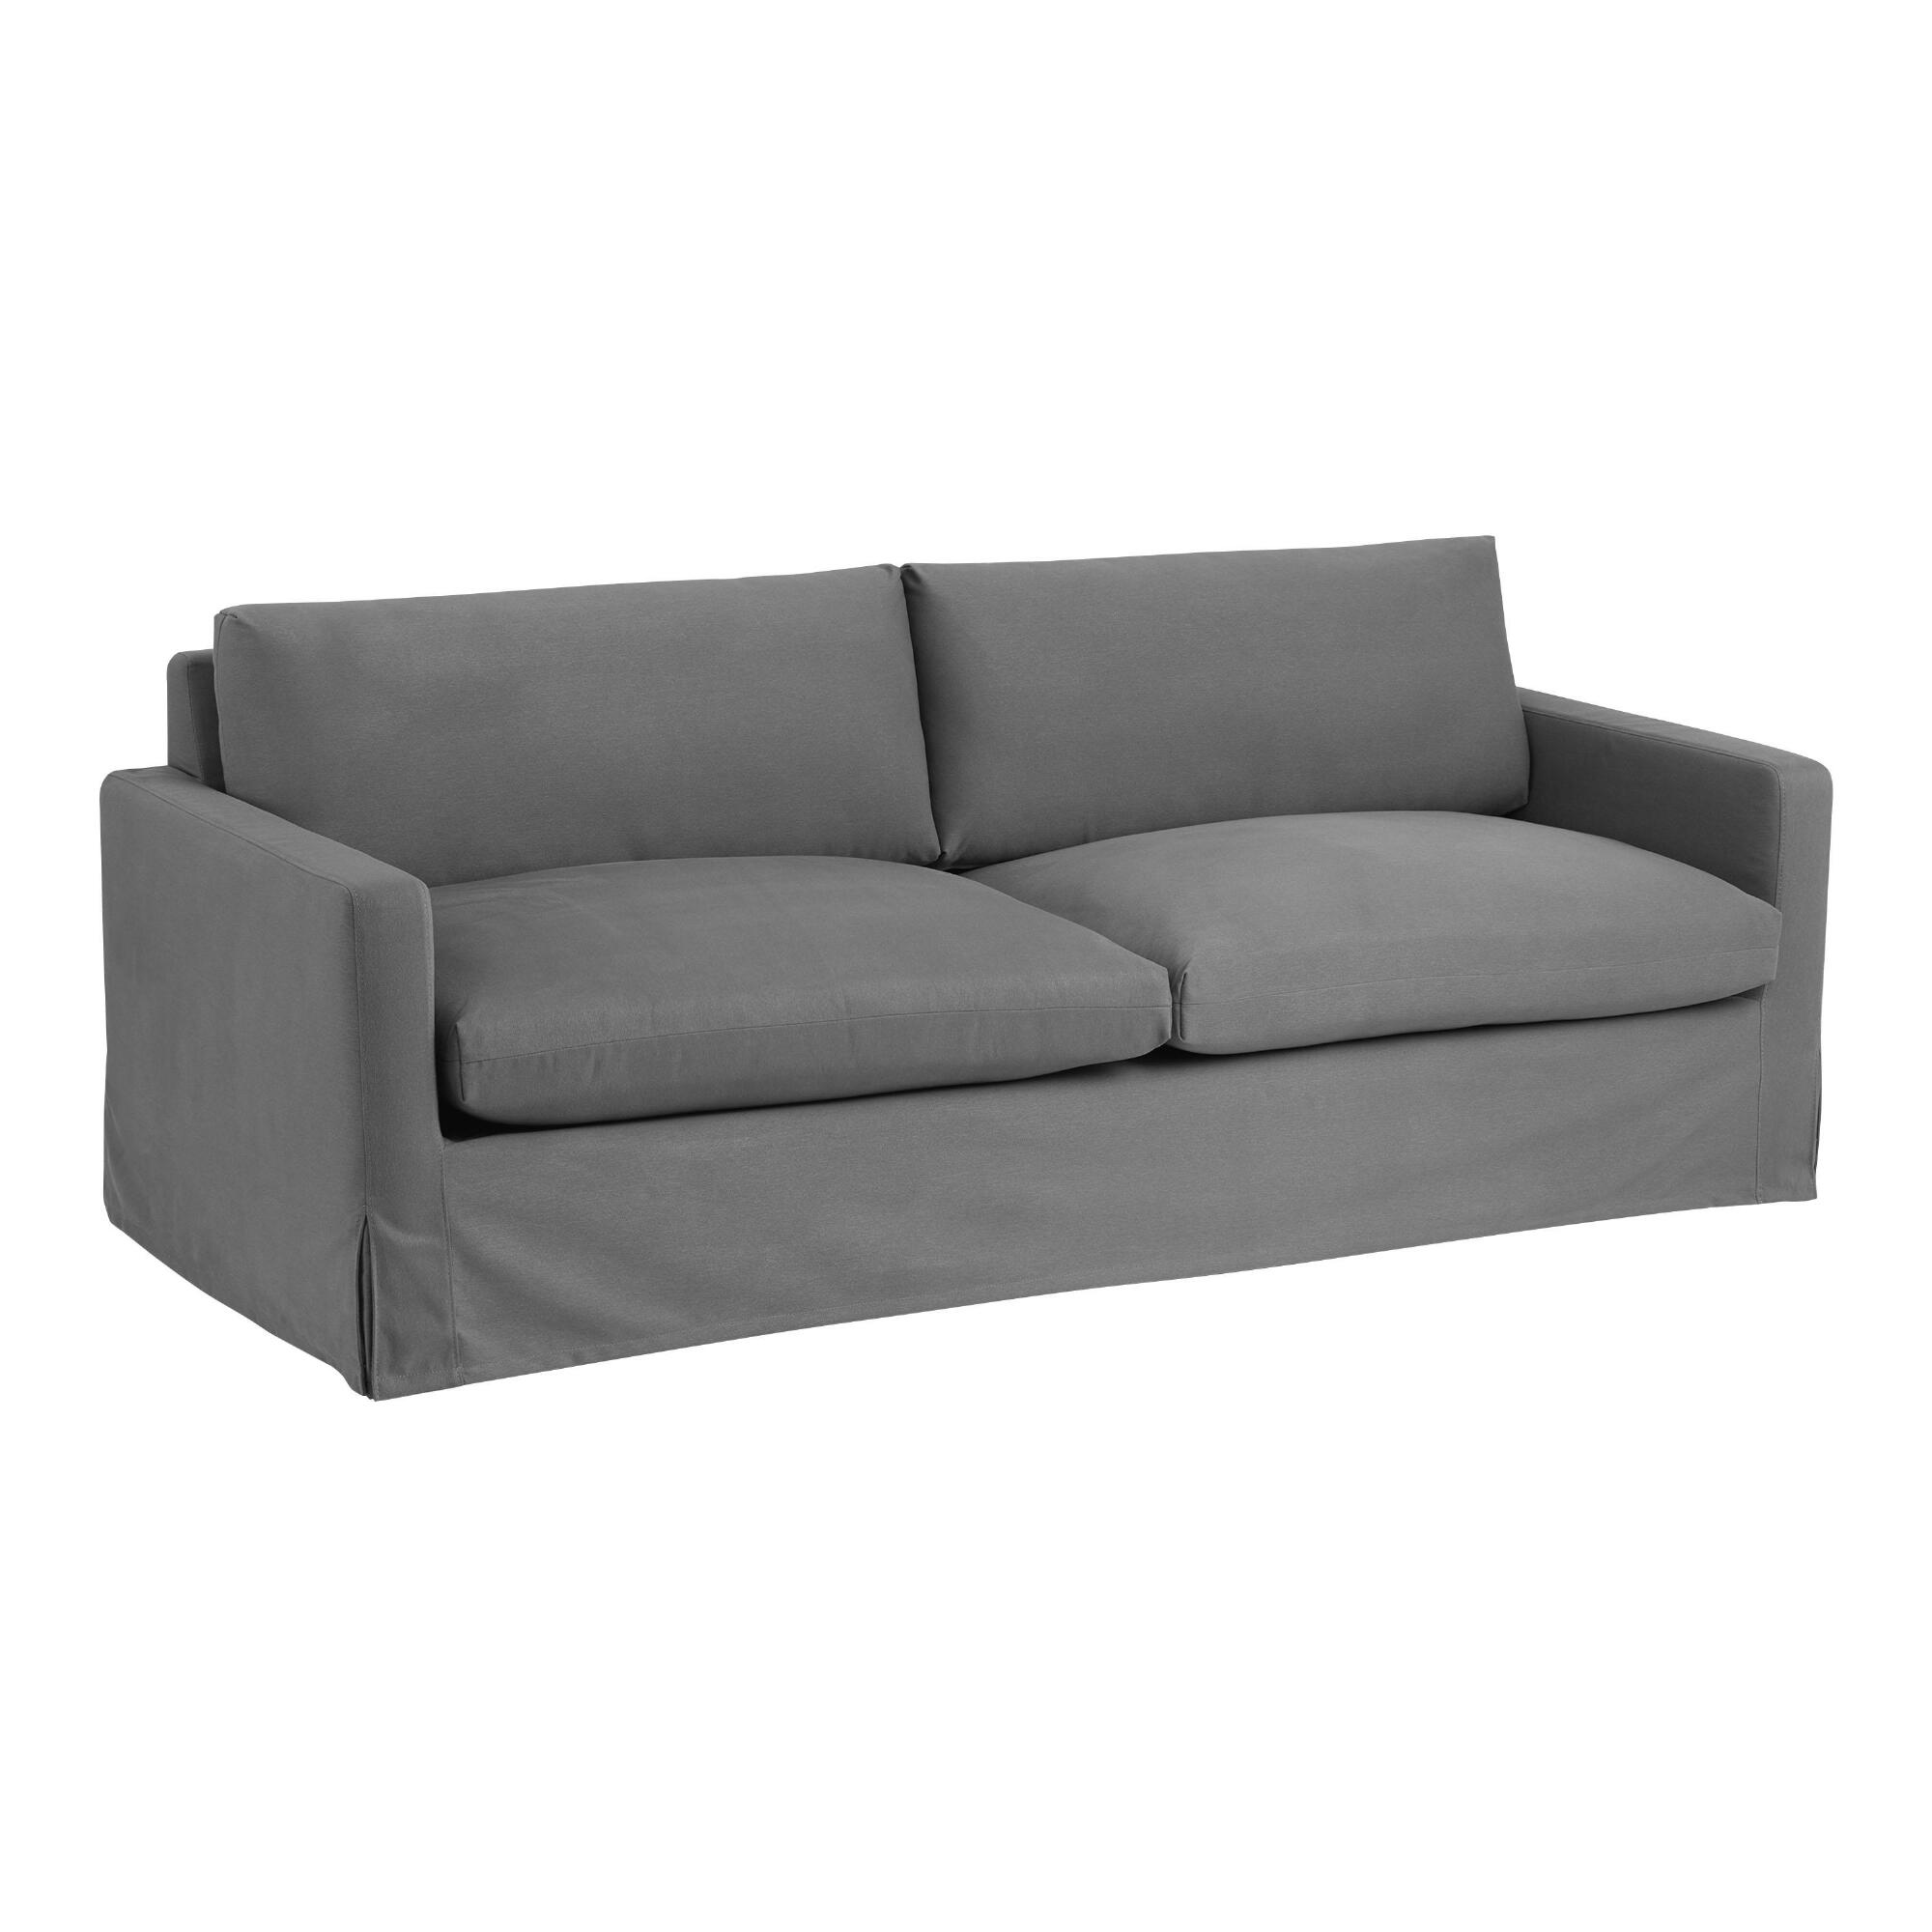 Chandler Slipcover Sofa: Gray - Polyester by World Market